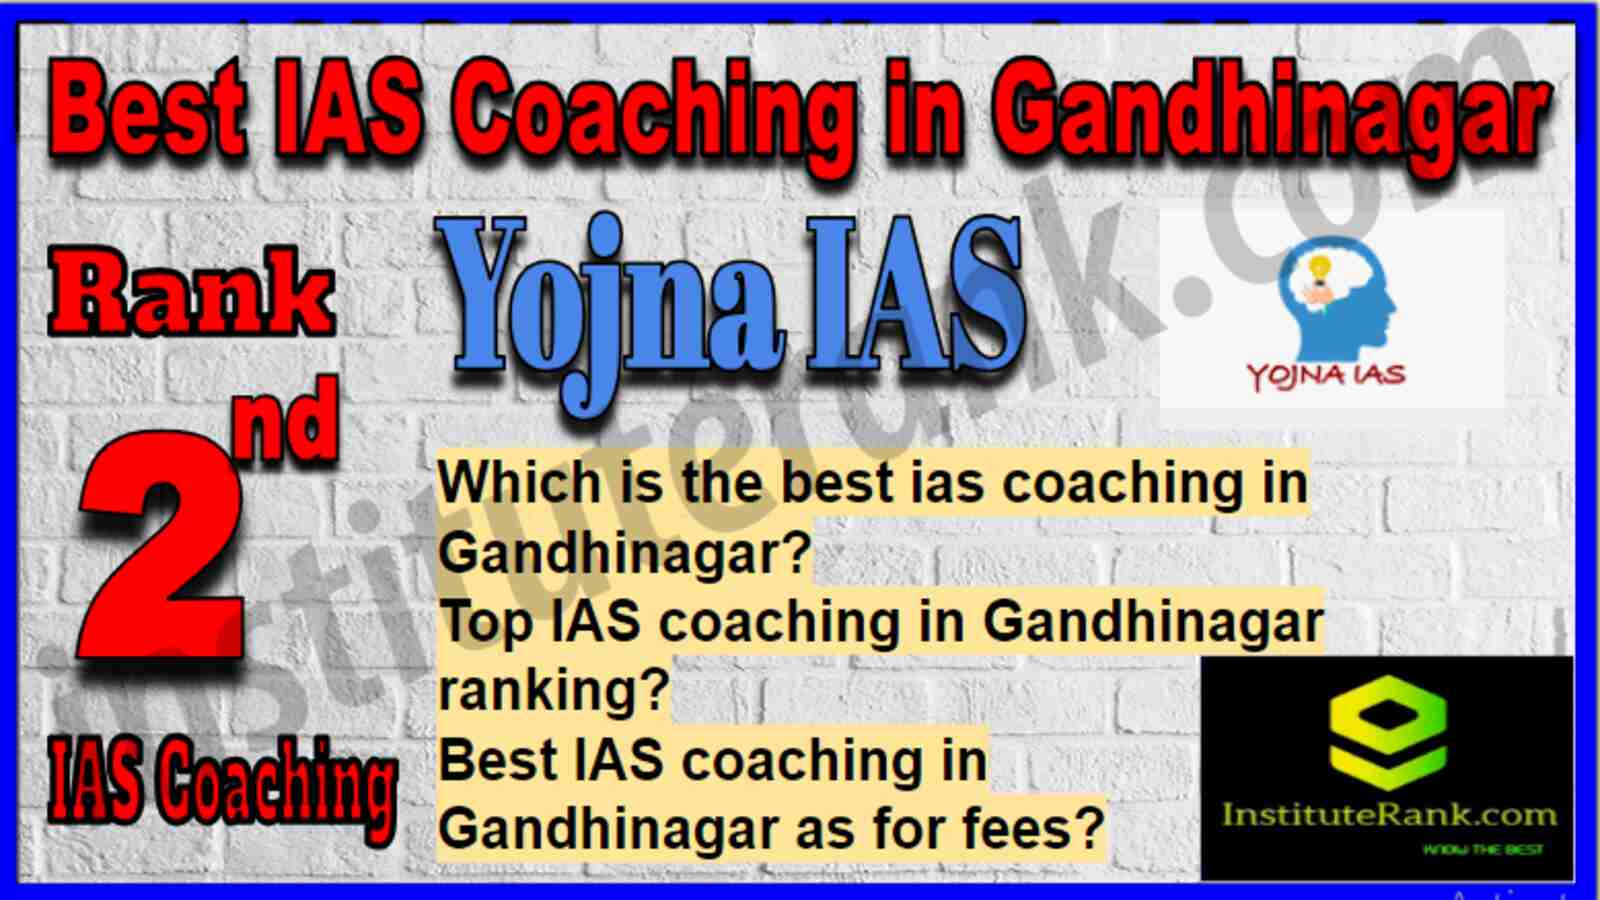 Rank 2 Best IAS Coaching in Gandhinagar